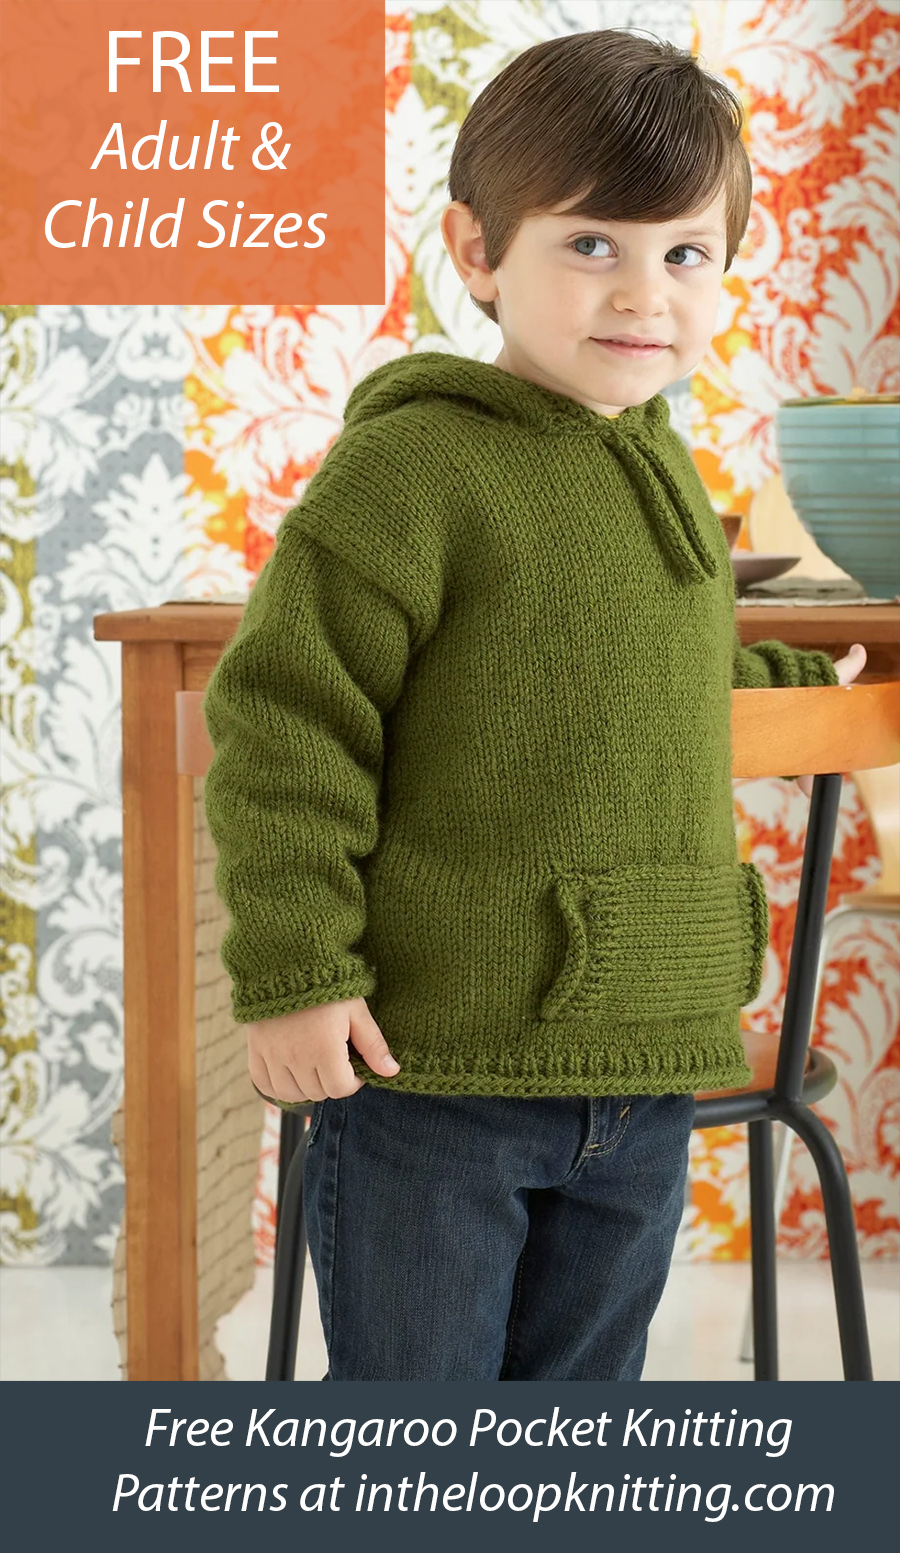 Free Kids to Adult Hoodie Sweater Knitting Pattern